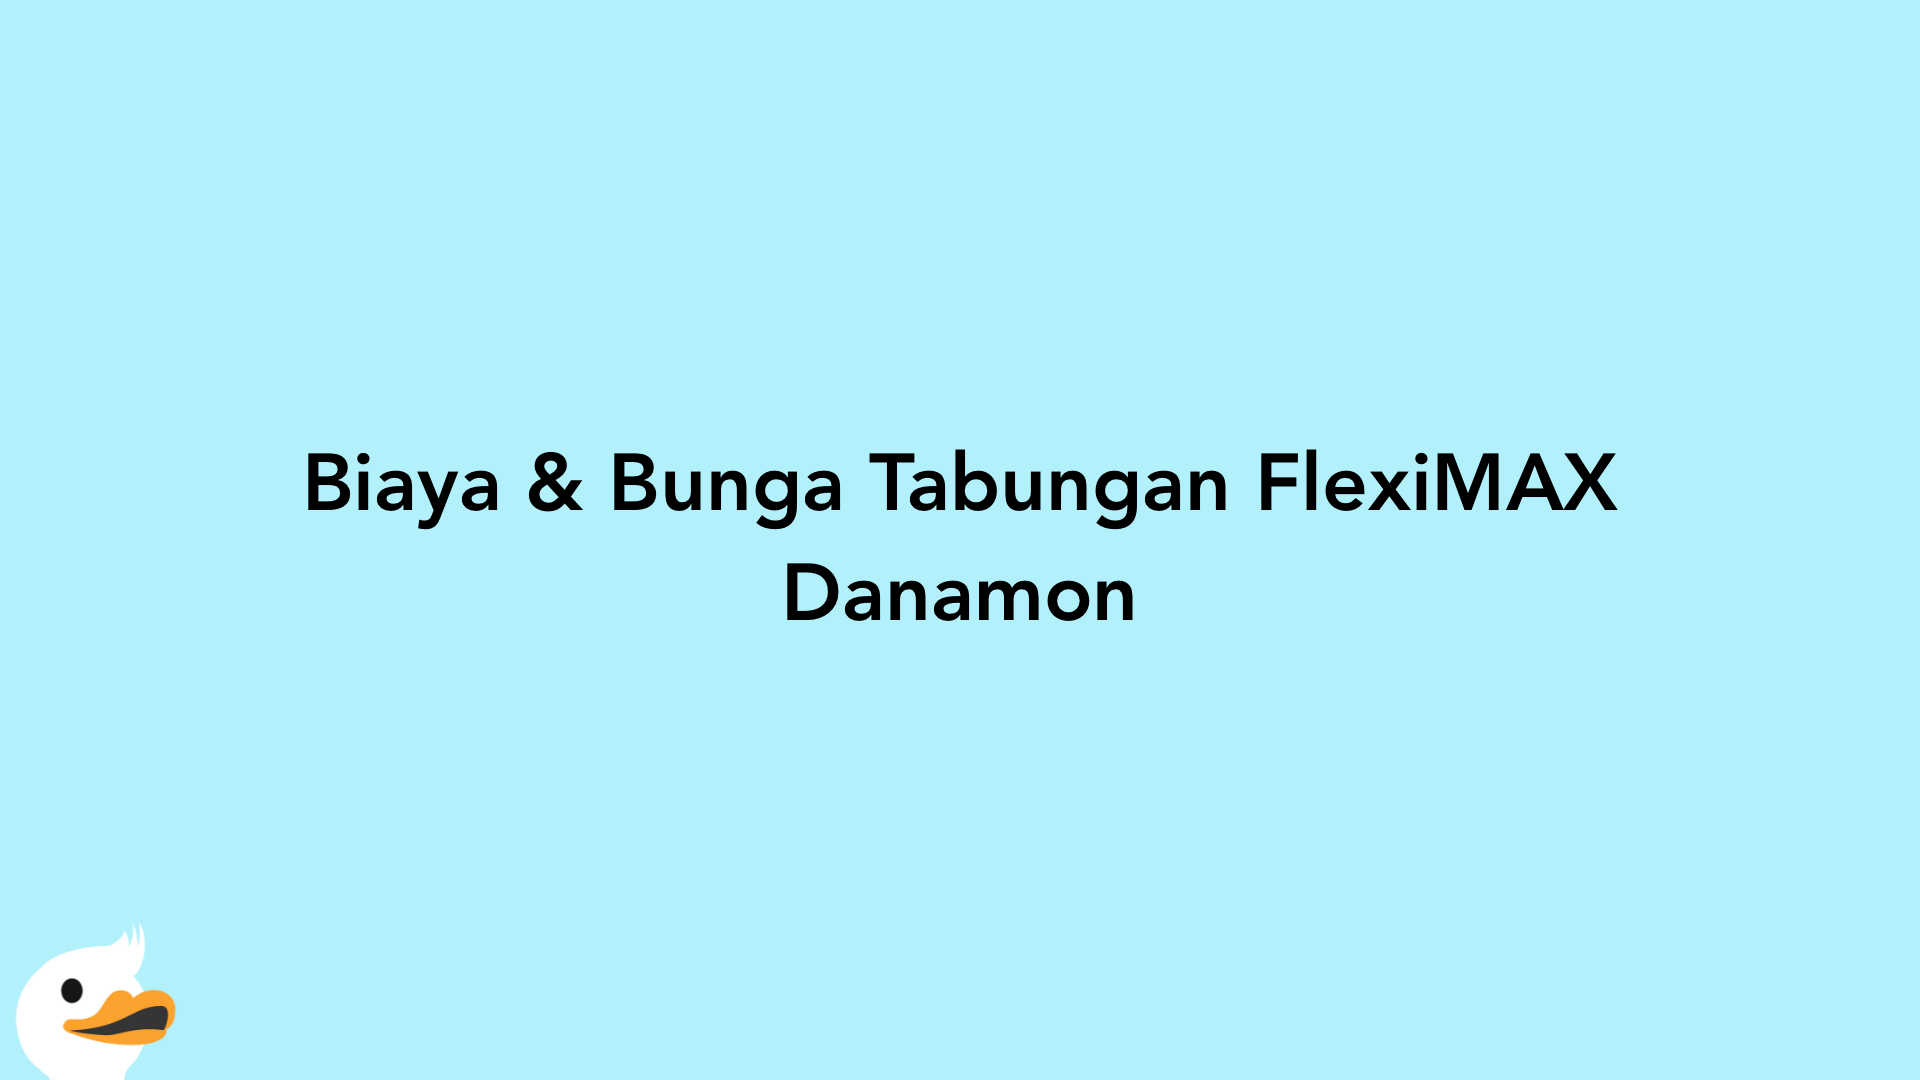 Biaya & Bunga Tabungan FlexiMAX Danamon